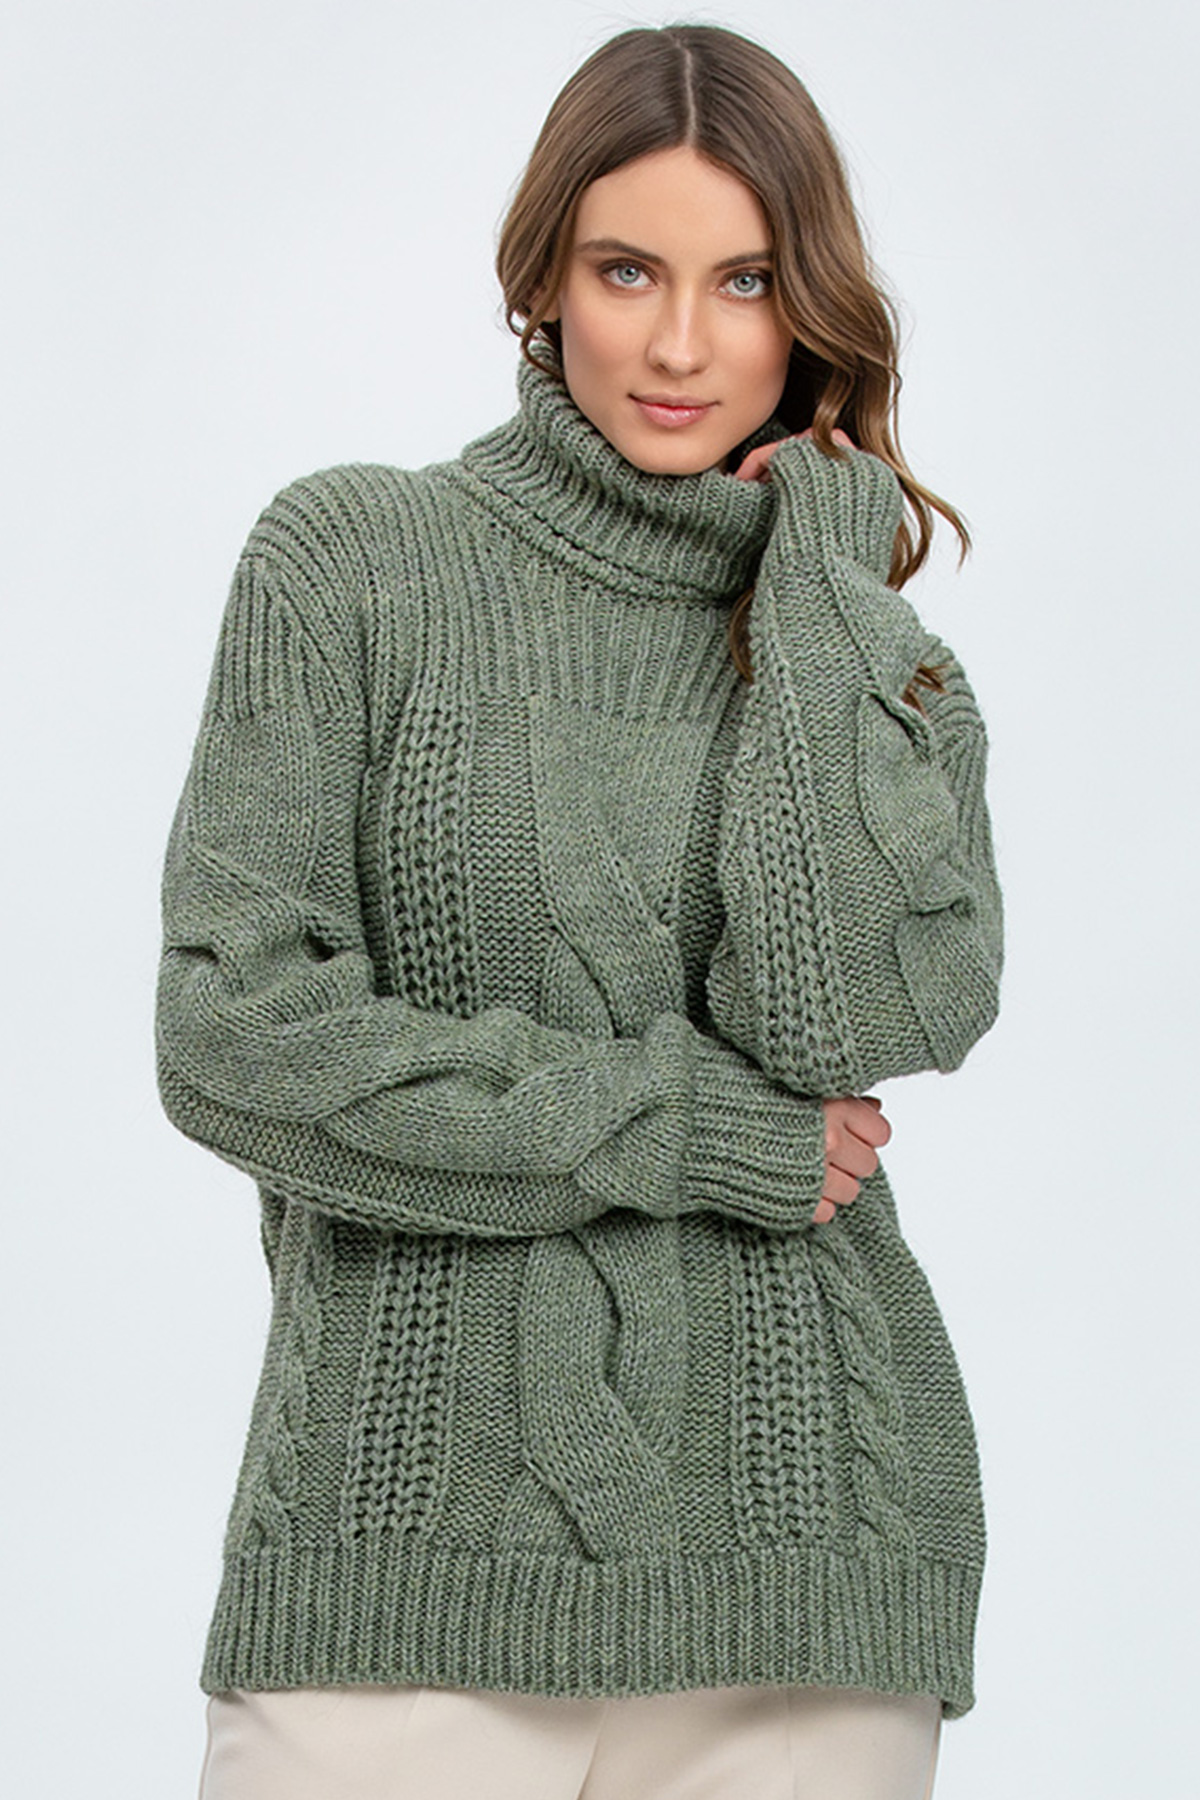 Himalaya Cable Sweater in Sage - hautemama